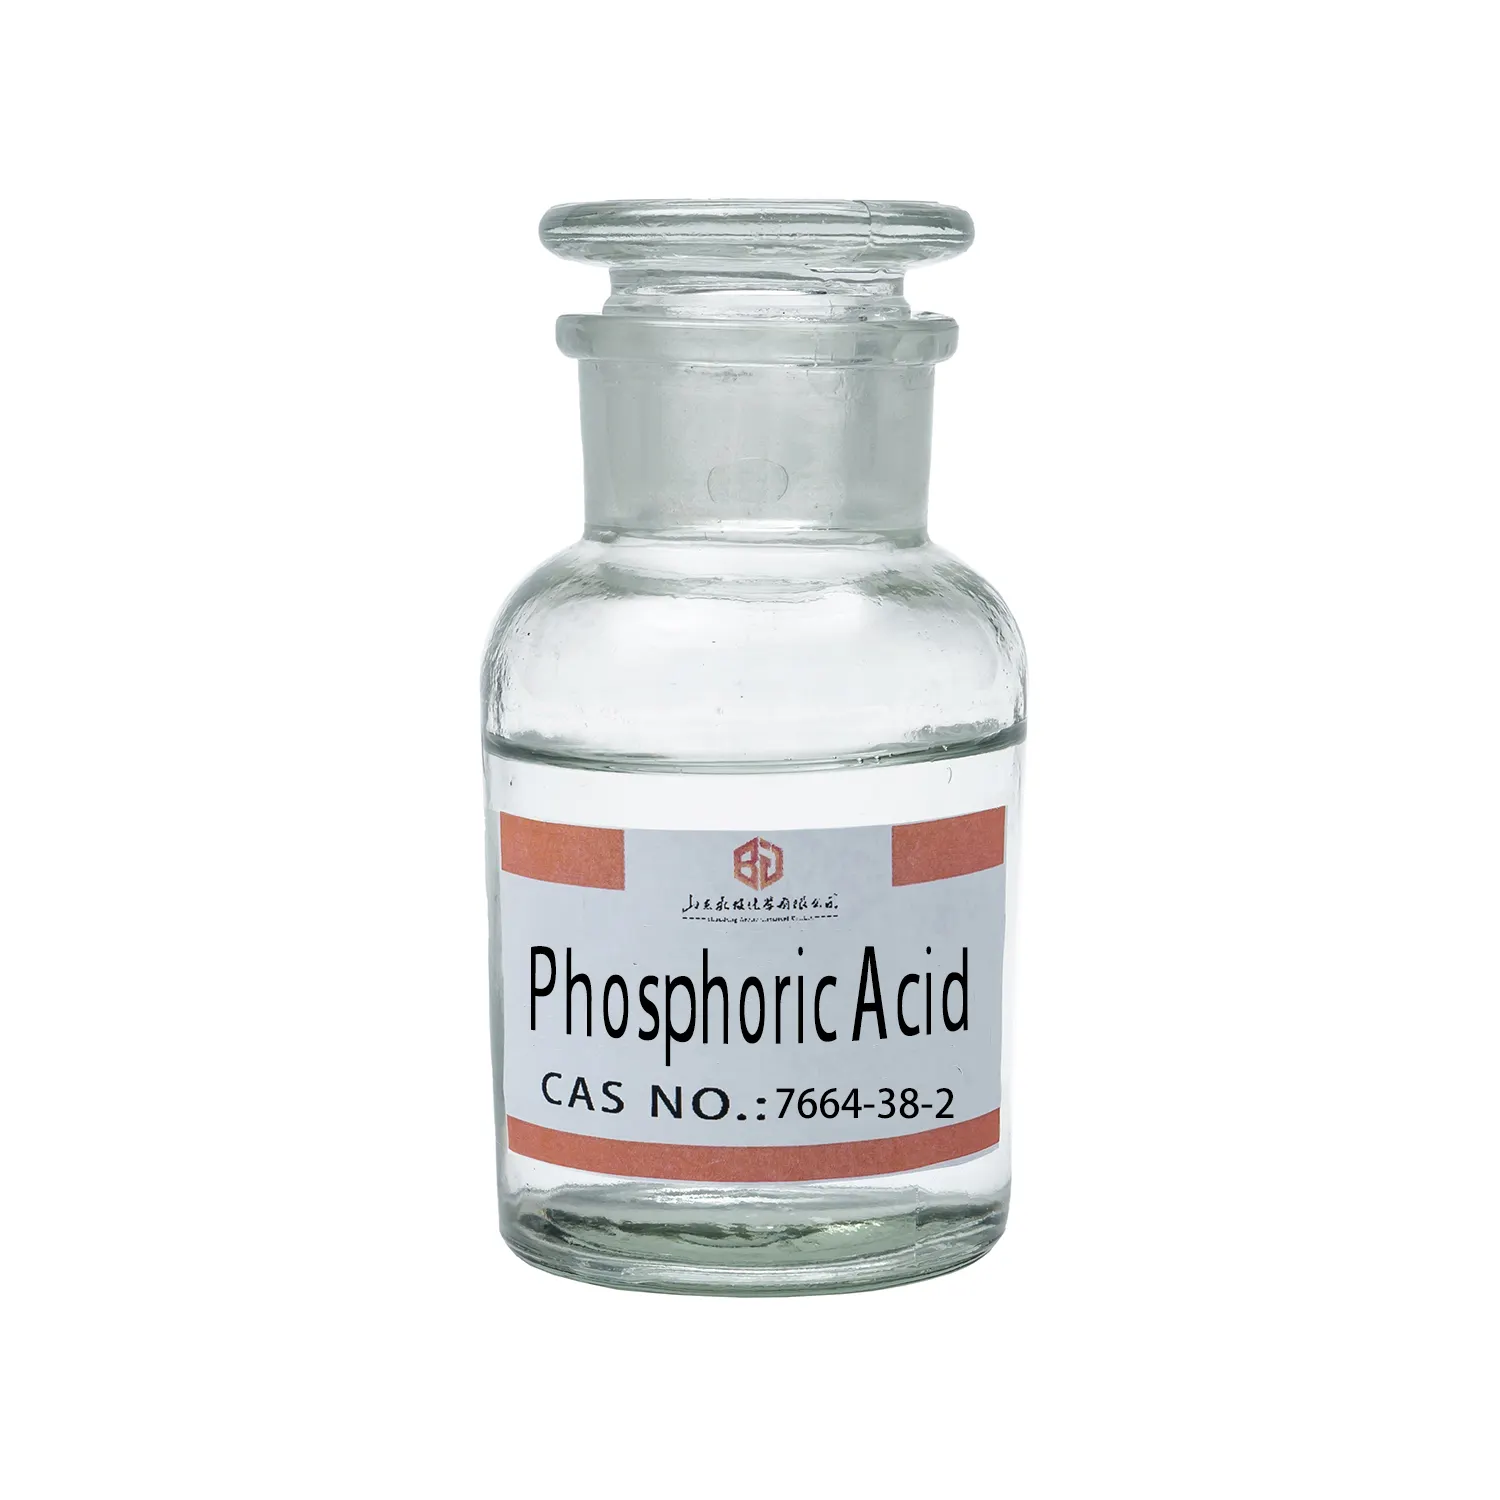 CAS: 7664-38-2 Saftproduktionsmittel für kohlensäuregetränke, hochwertige 85 % Phosphorsäure